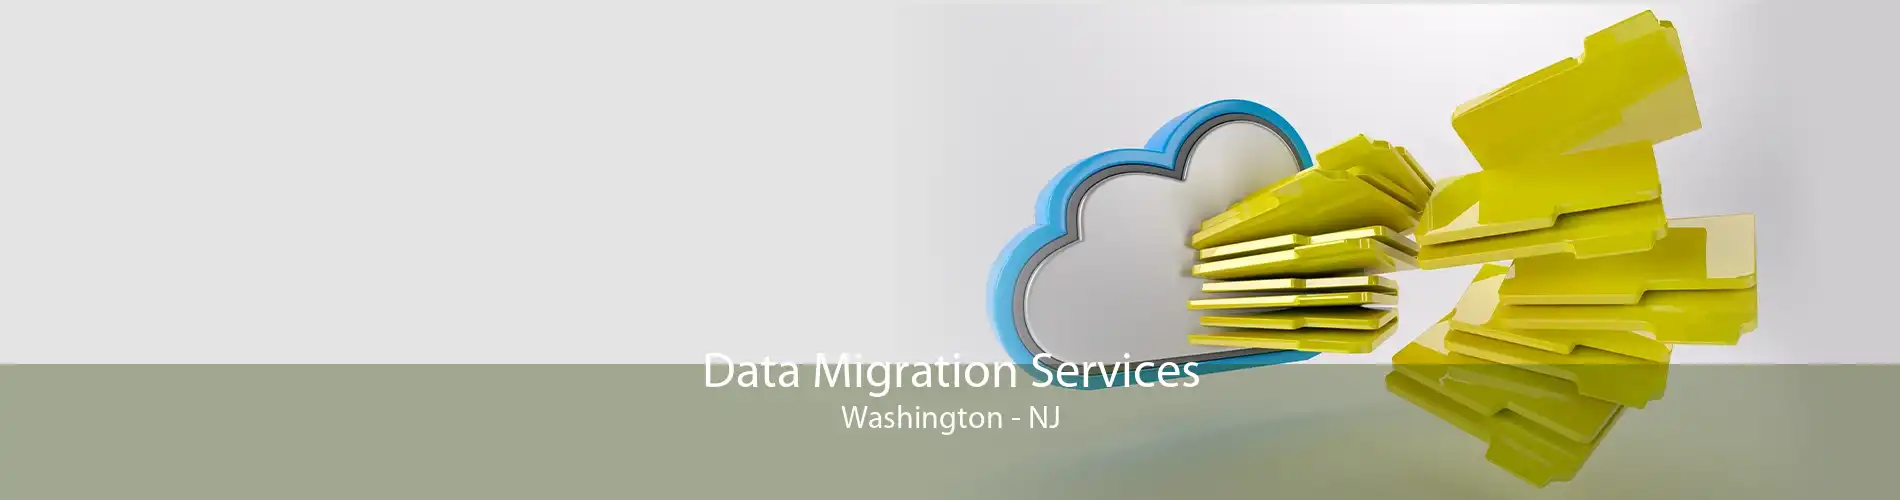 Data Migration Services Washington - NJ